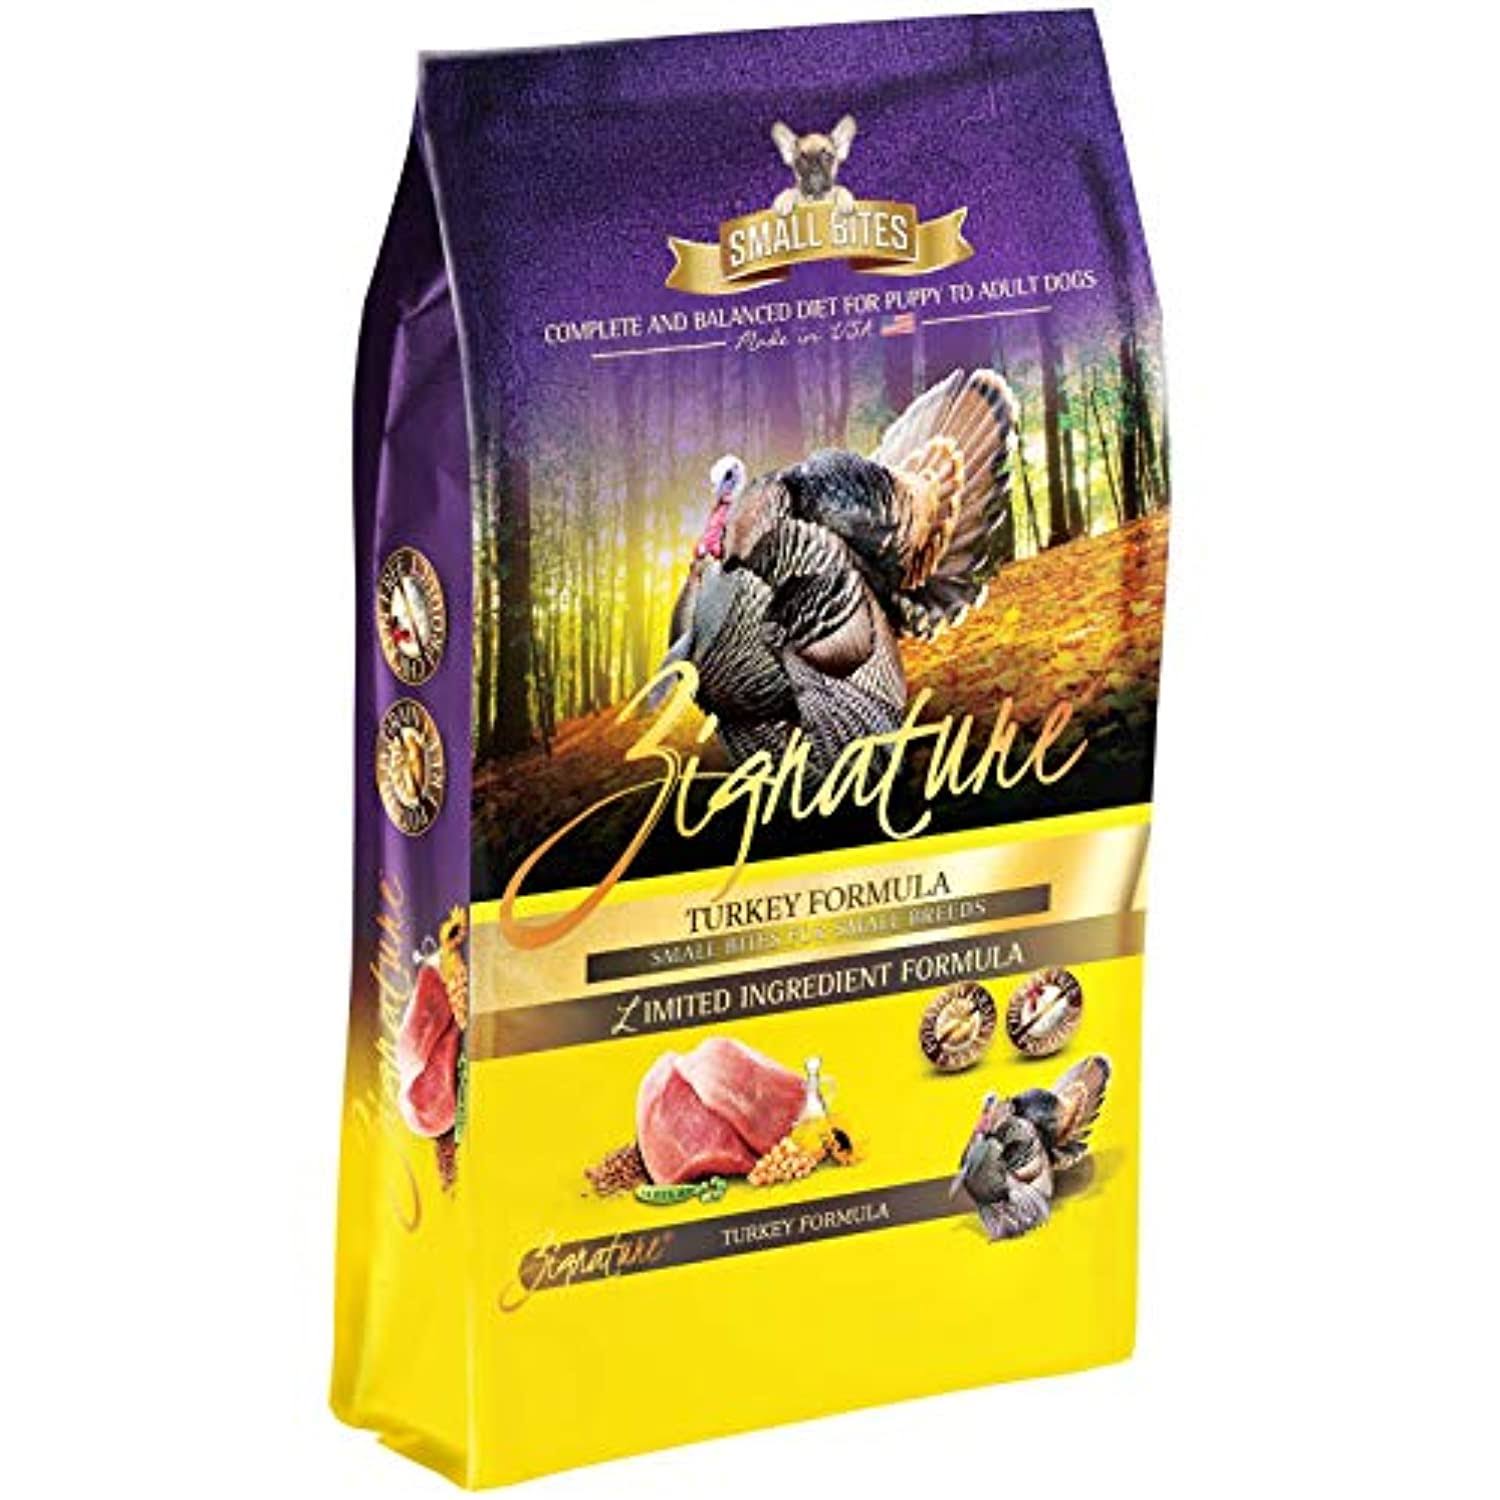 Zignature Turkey Formula Grain-Free Small Bites Dry Dog Food 125lb